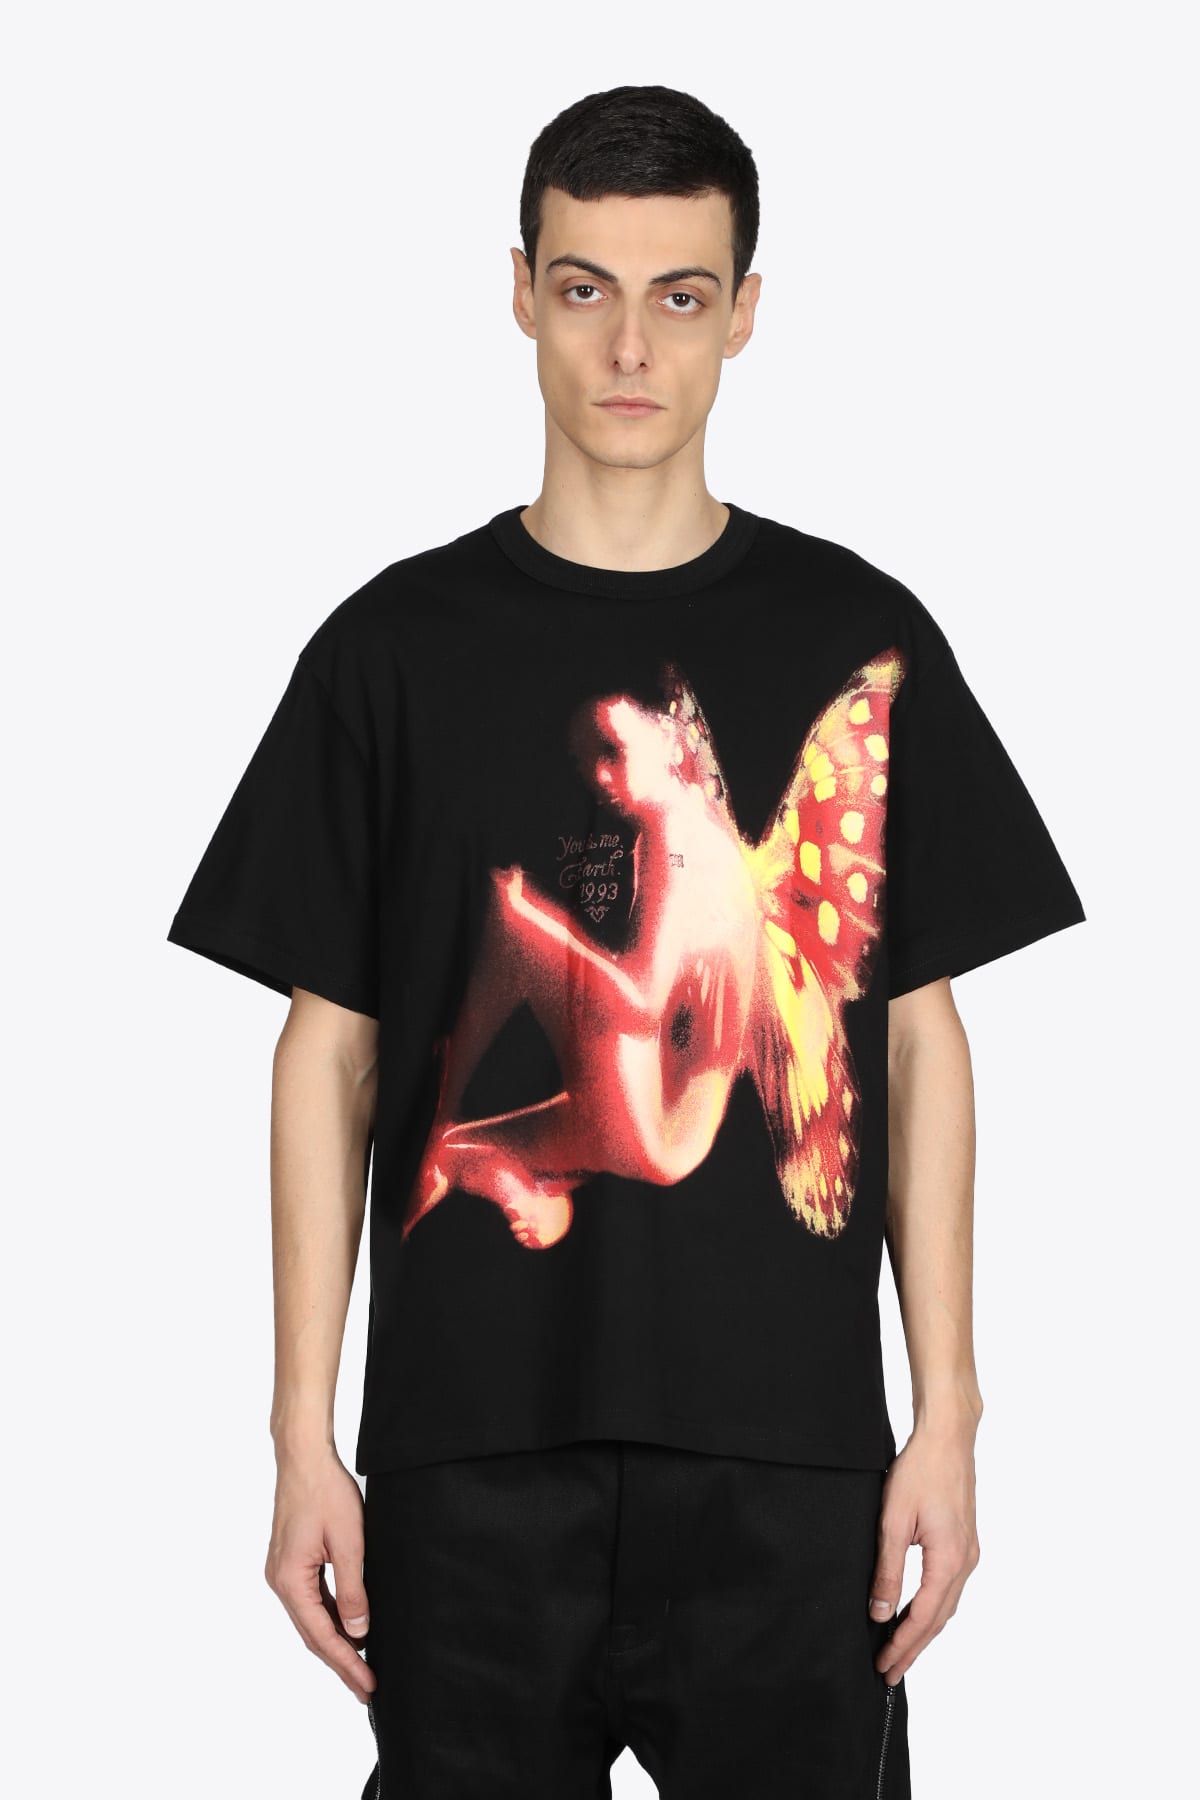 MISBHV Metamorphosis T-shirt Black cotton t-shirt with butterfly-woman print - Metamorphosis t-shirt